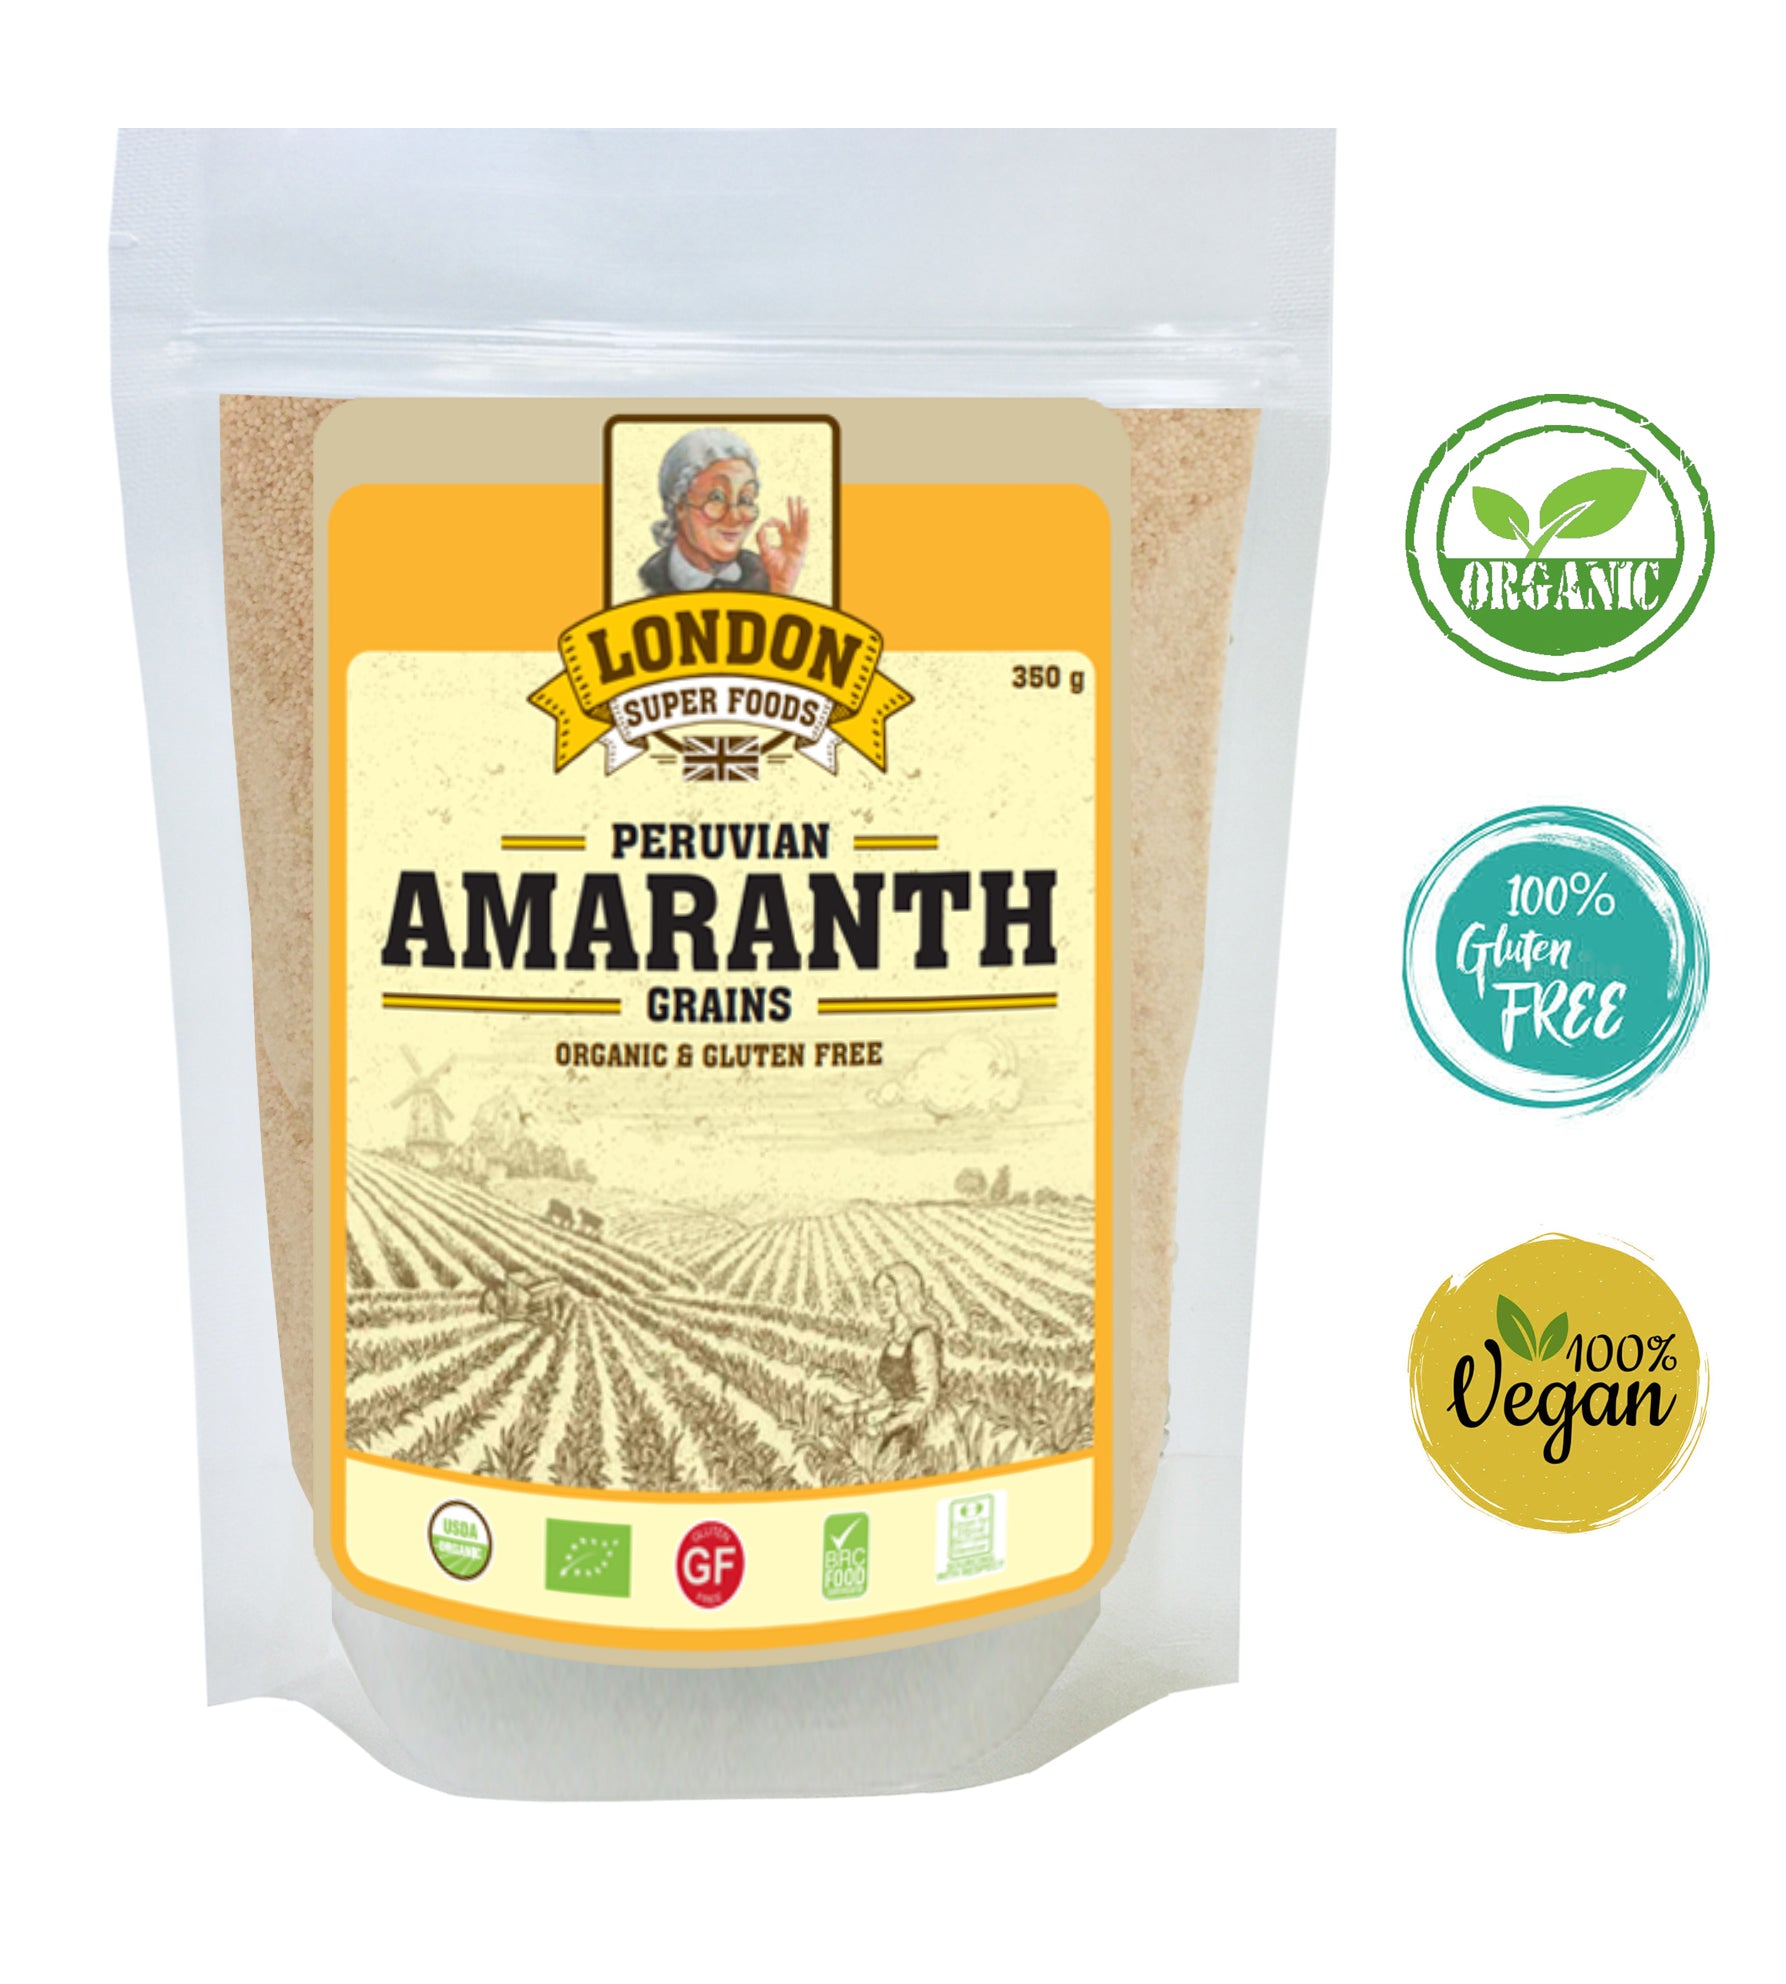 LONDON SUPER FOODS Peruvian Organic Amaranth Grains, 350g - Gluten Free